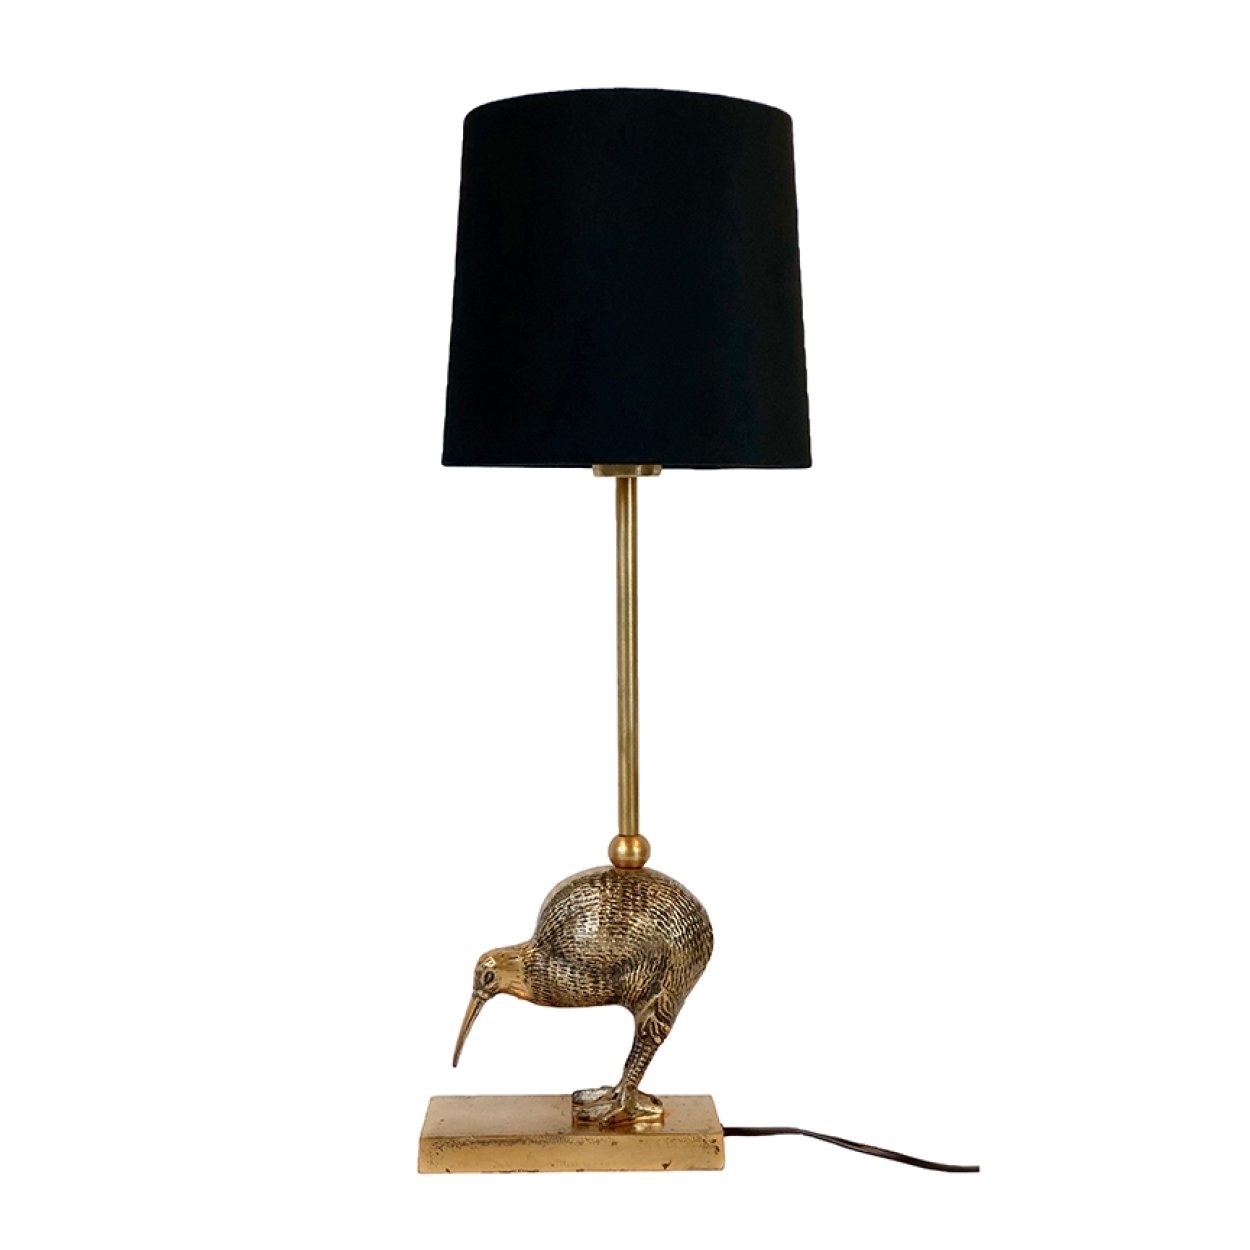 Kiwi lamp - SuperMatique